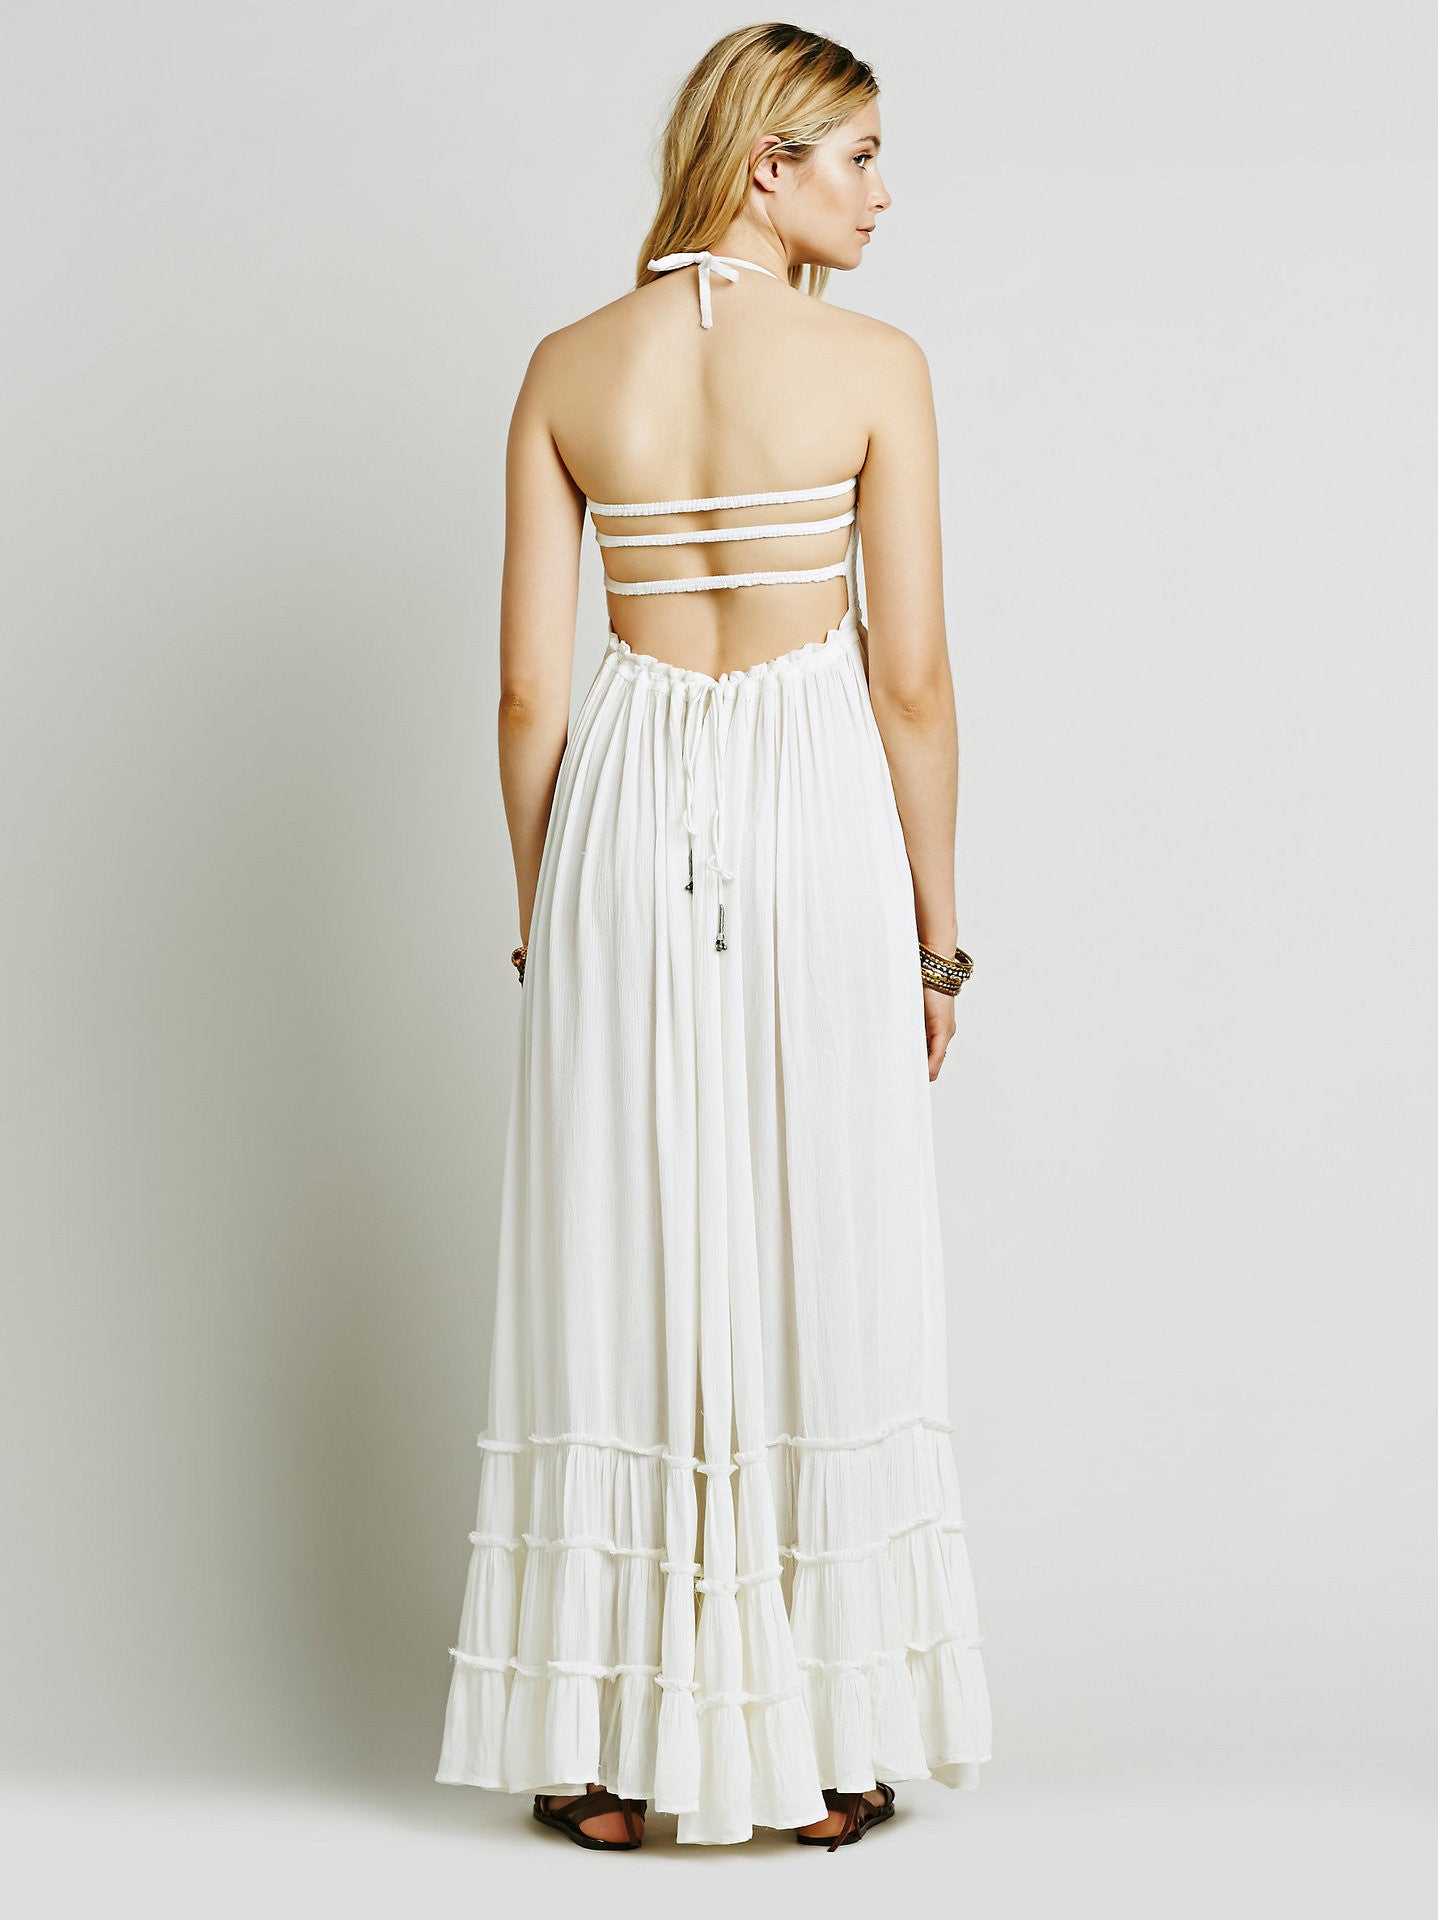 Backless Spaghetti Strap Sleeveless Long Beach Dress - Oh Yours Fashion - 8